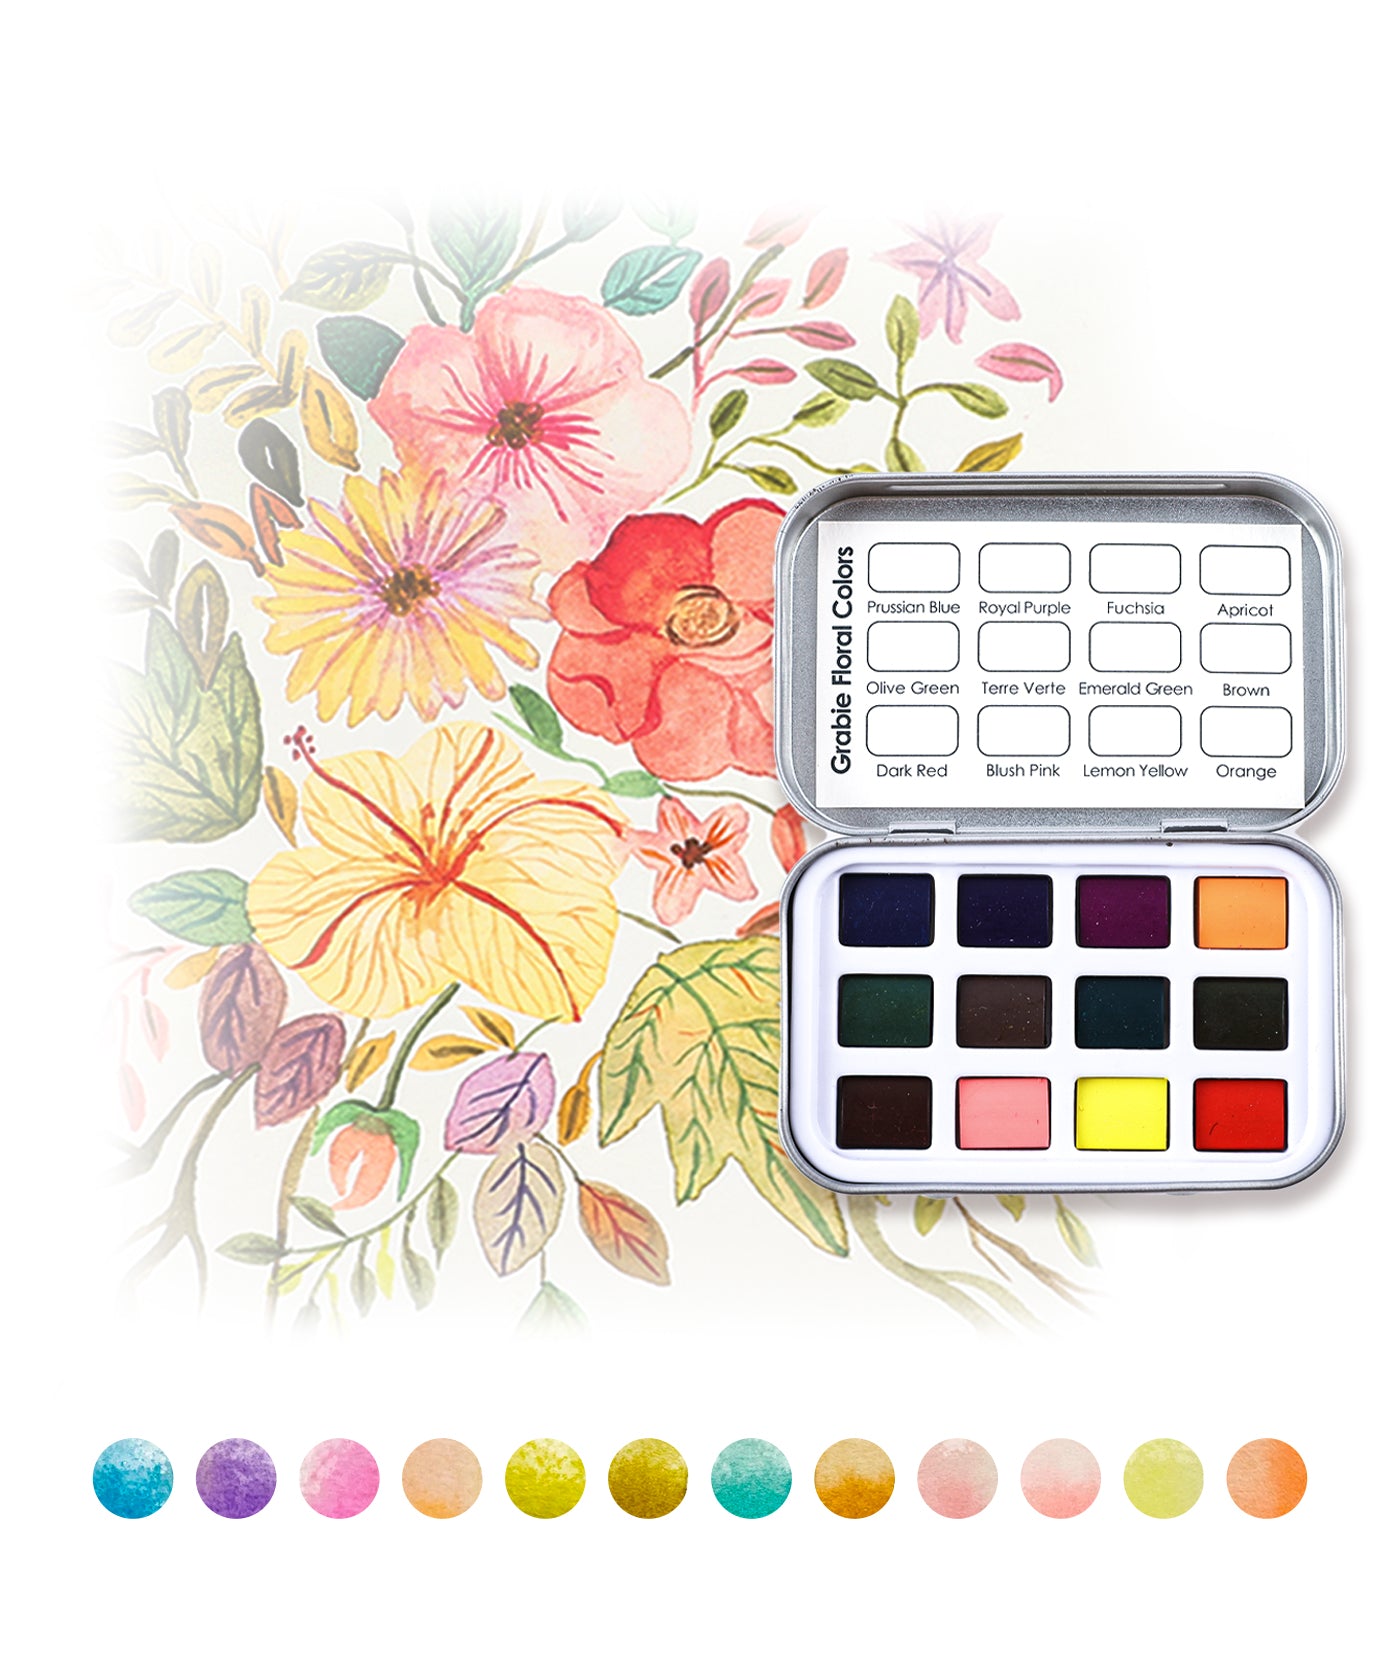 Watercolor Pocket Set of 12 - Floral Colors - Grabie®